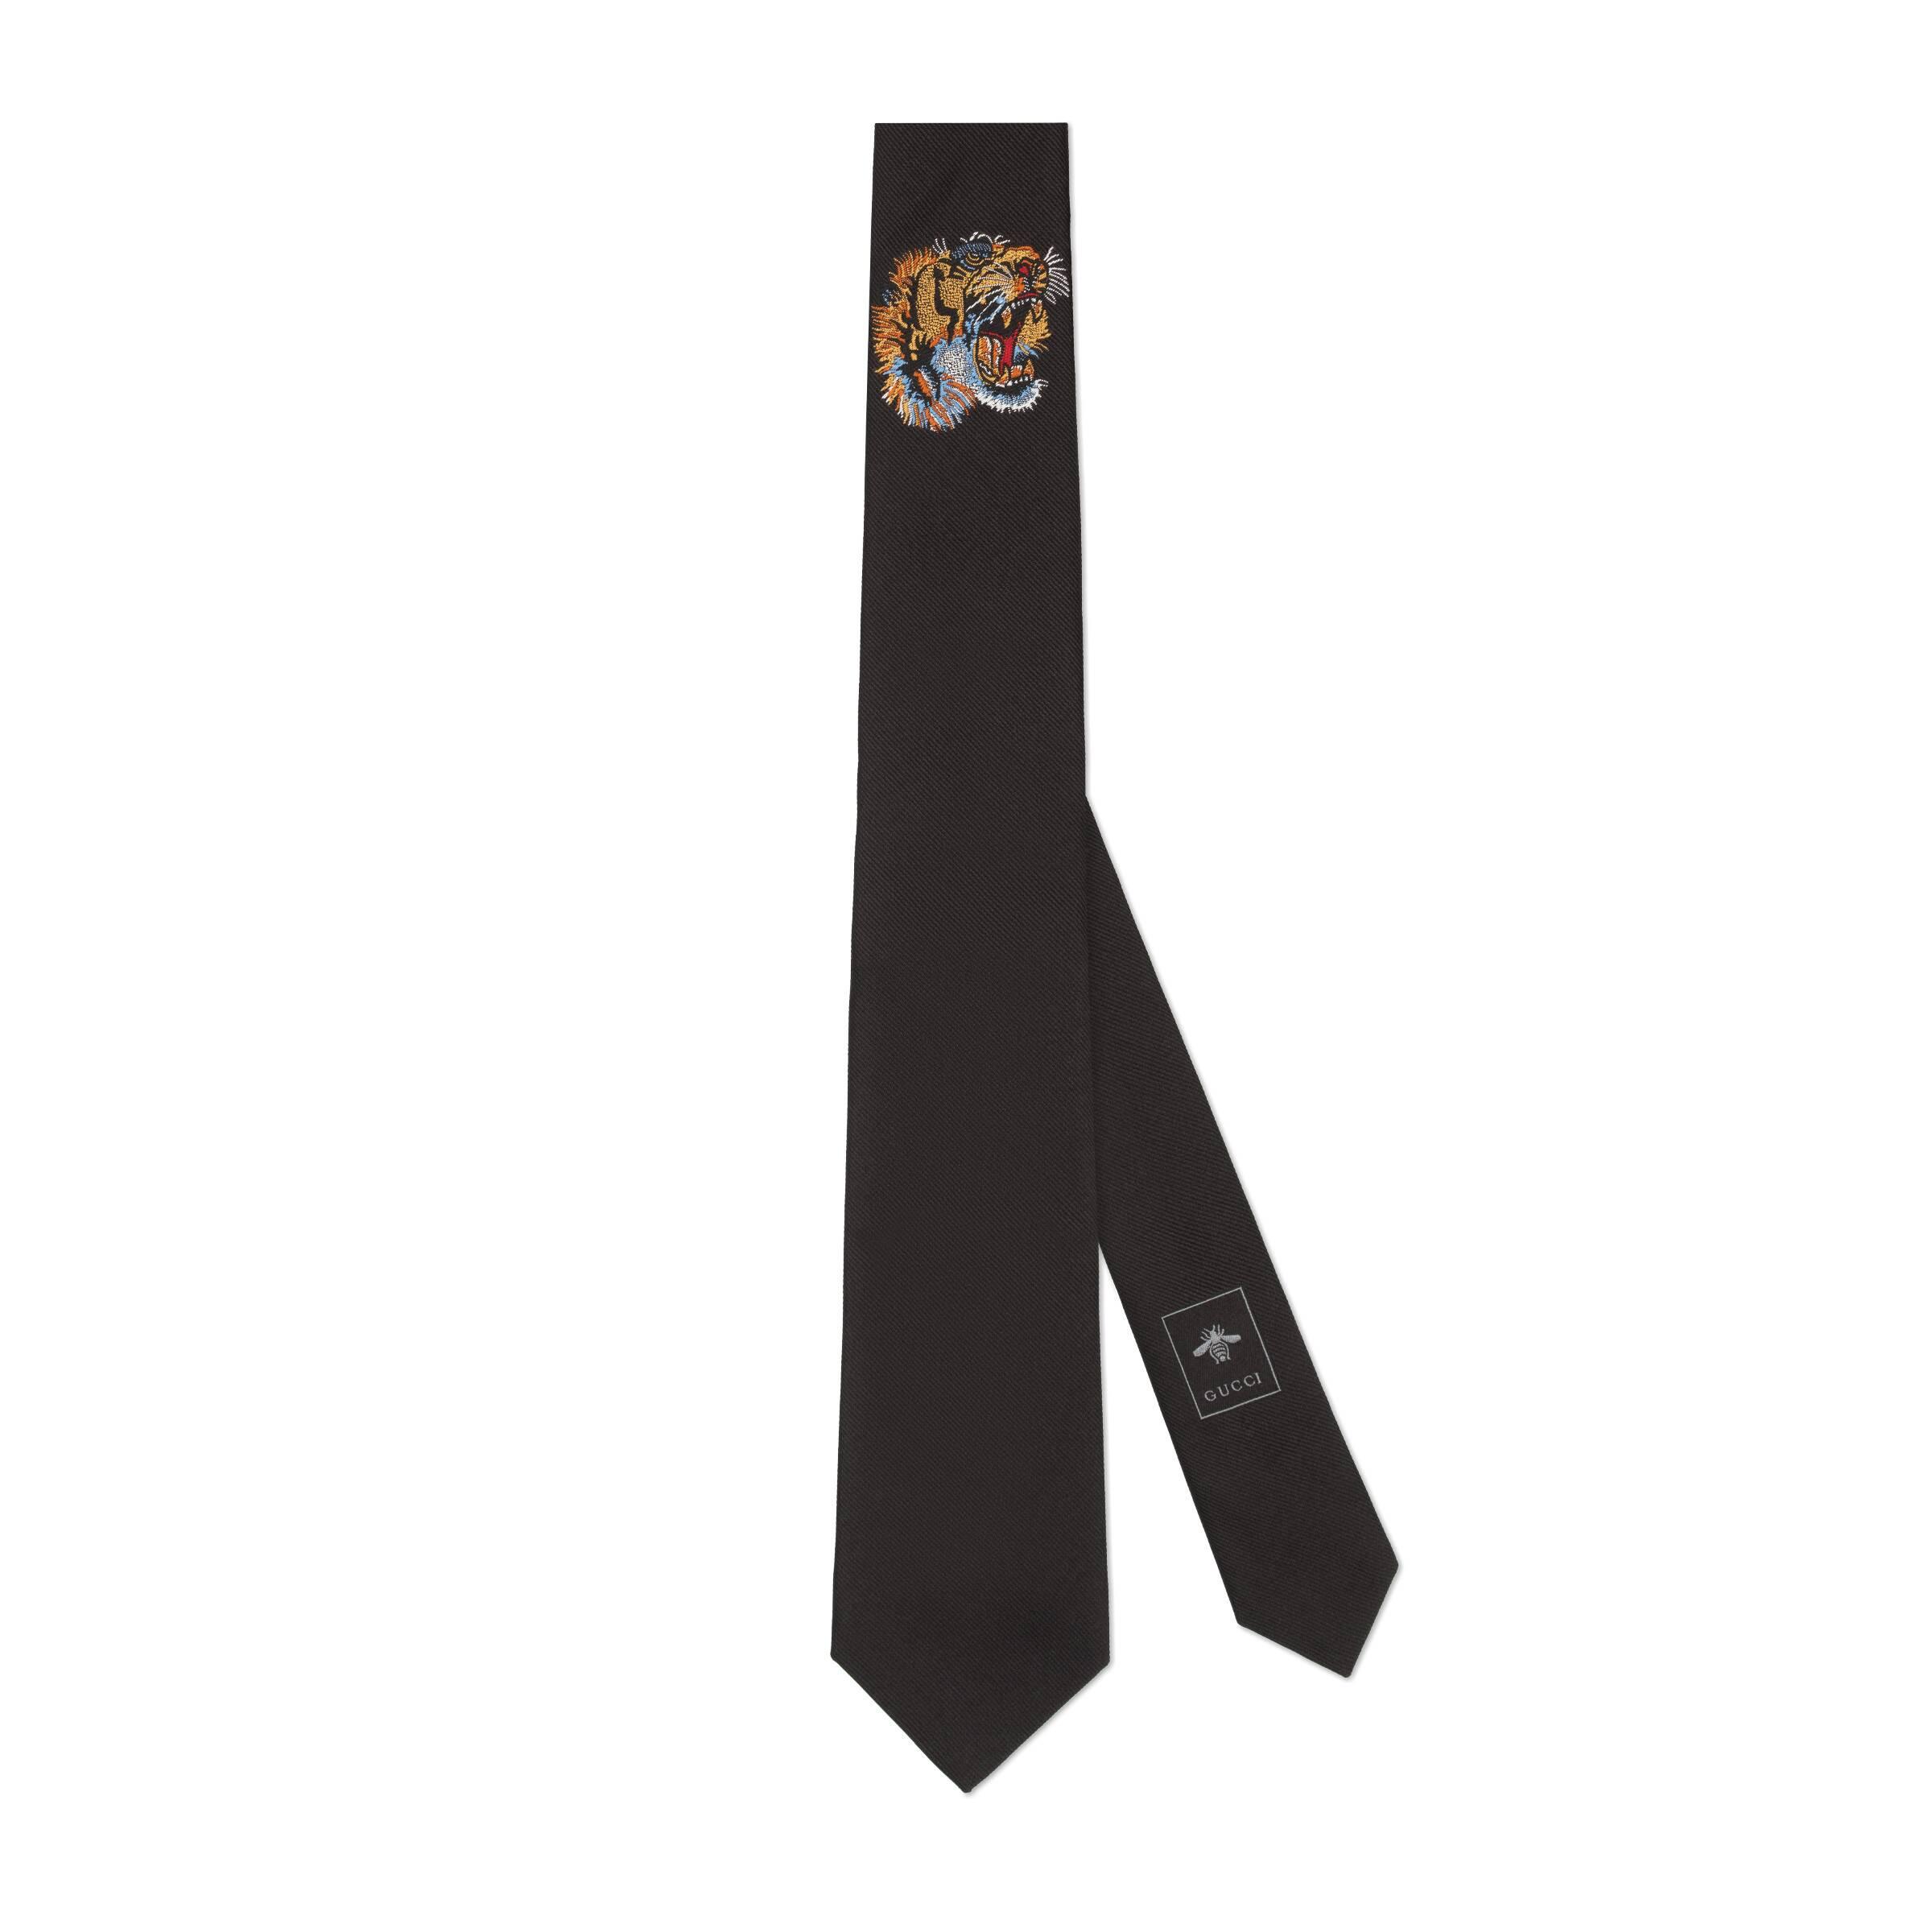 Gucci Tiger Underknot Silk Tie in Black for Men - Lyst